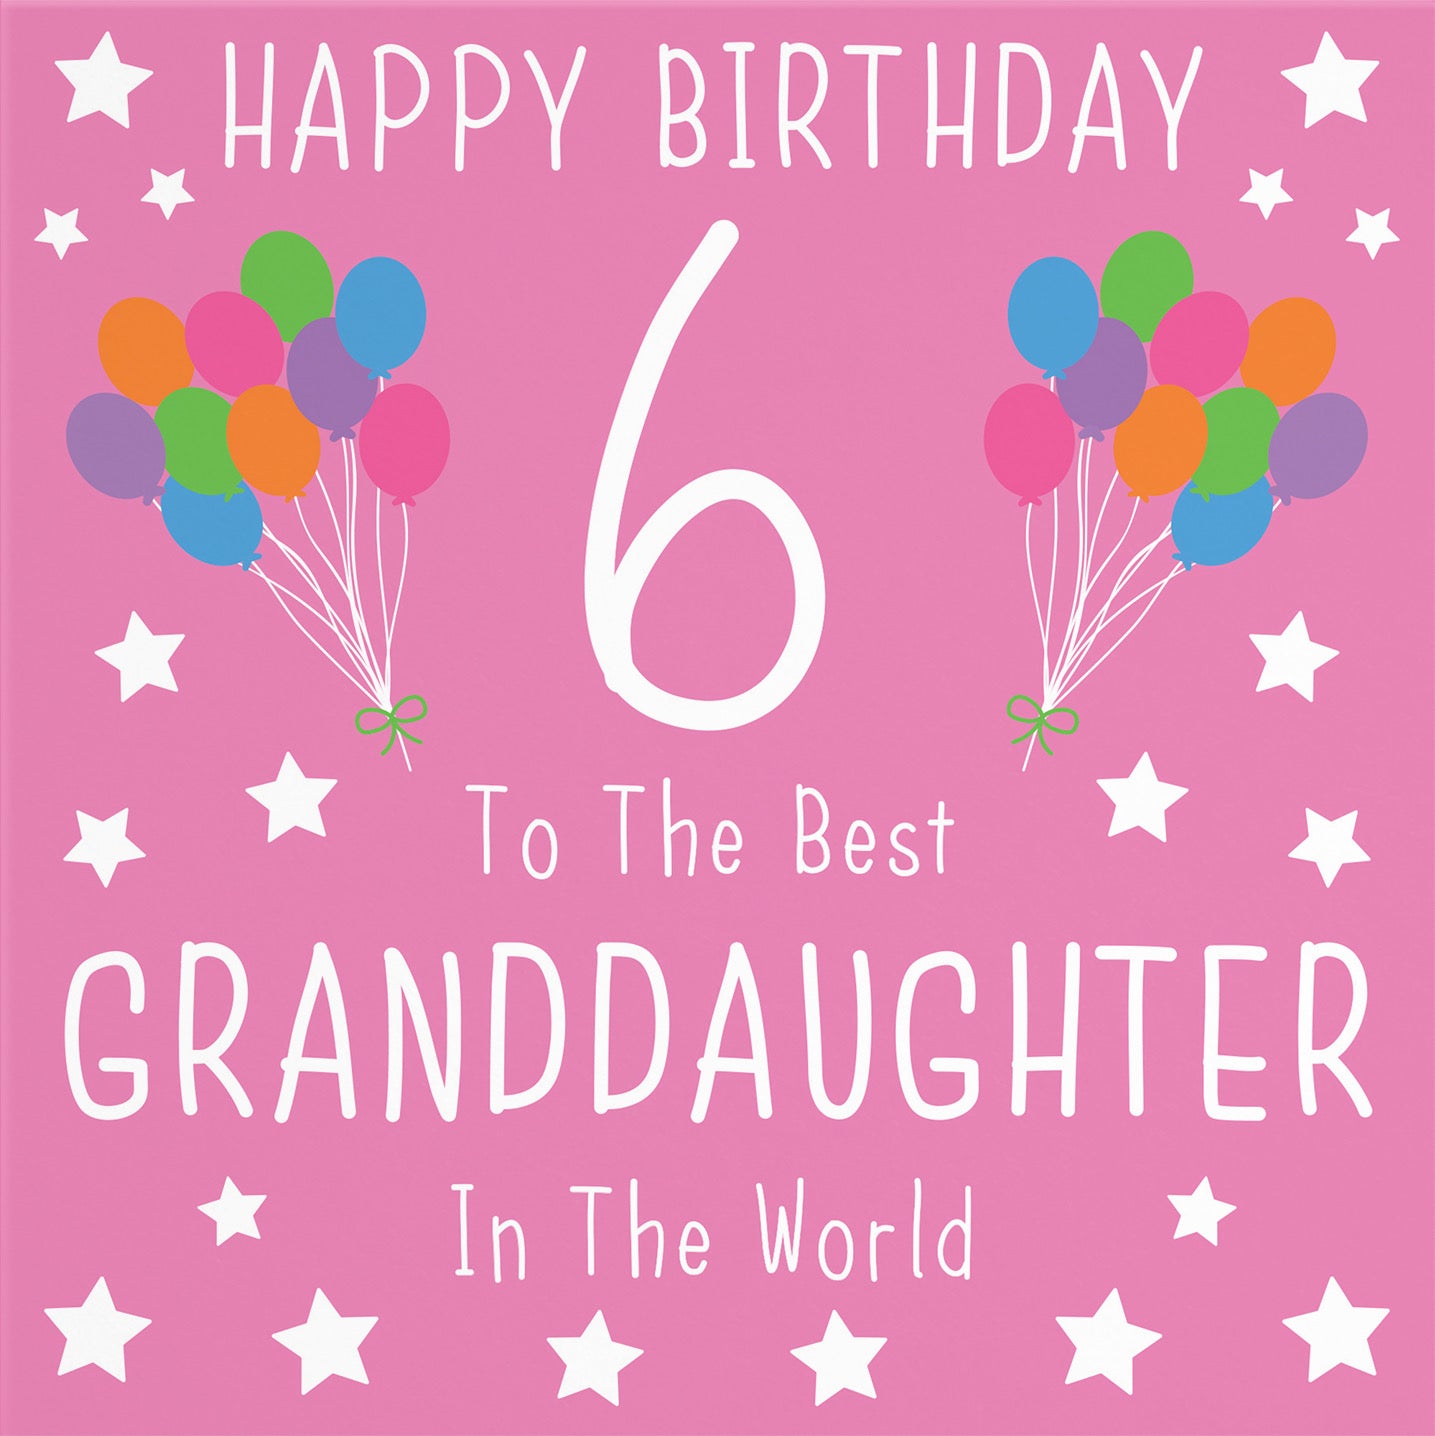 6th Granddaughter Birthday Card Iconic - Default Title (B08YGNRZ46)